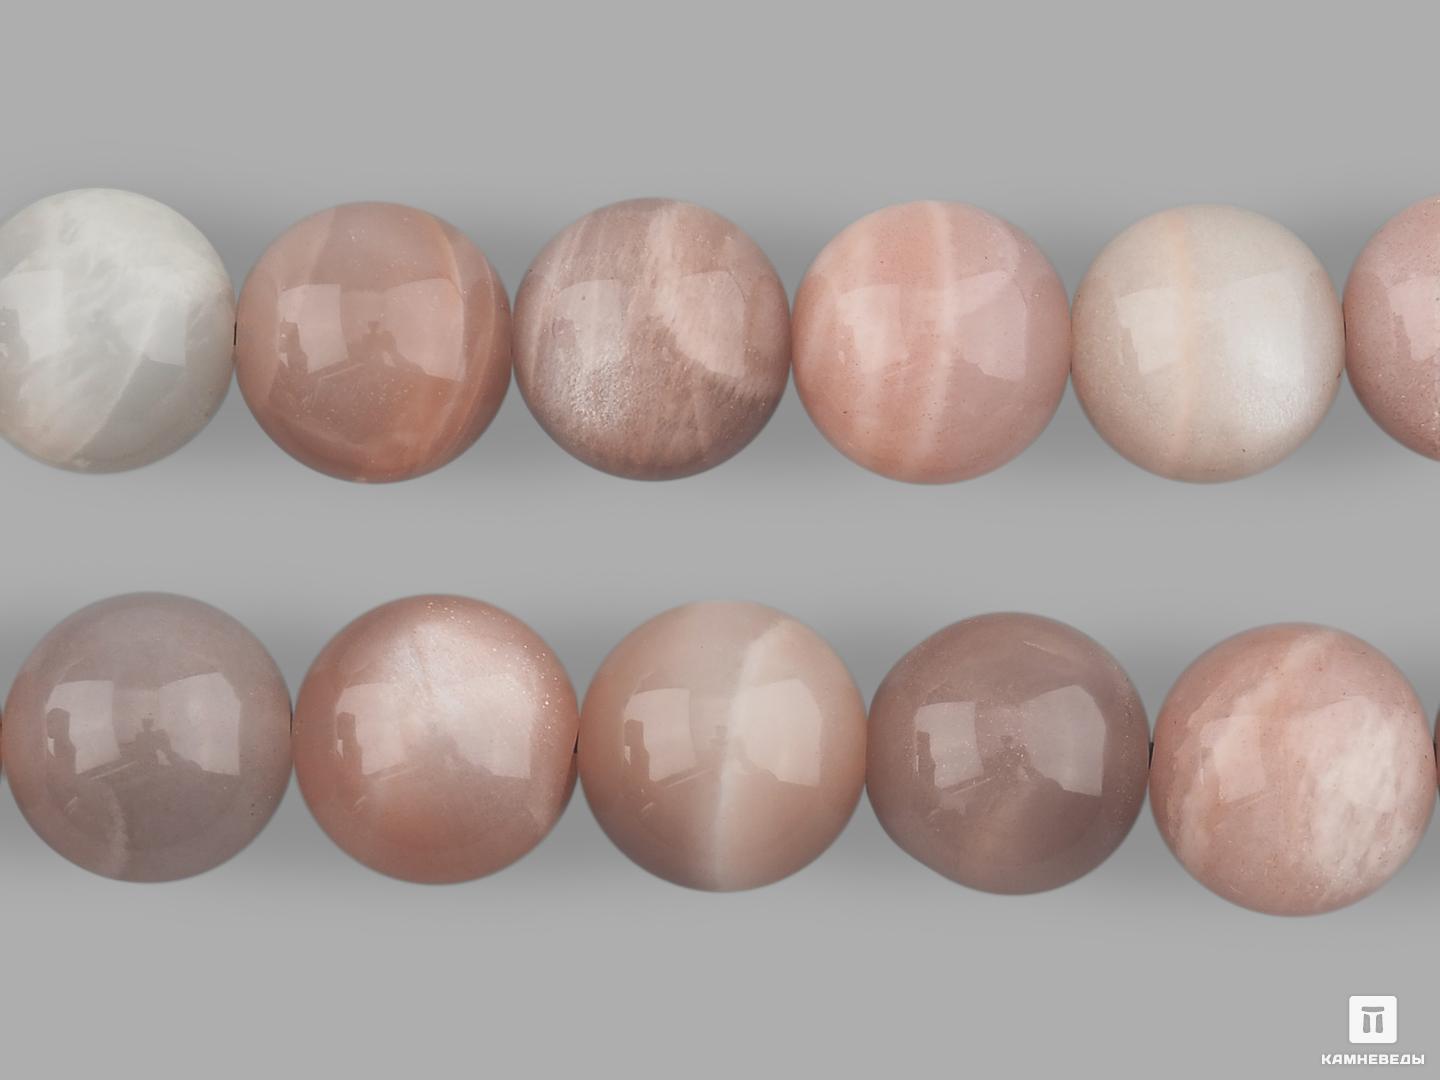 Бусины из лунного камня (адуляра), 36-41 шт. на нитке, 10-11 мм сердце камня легенды о сибирии